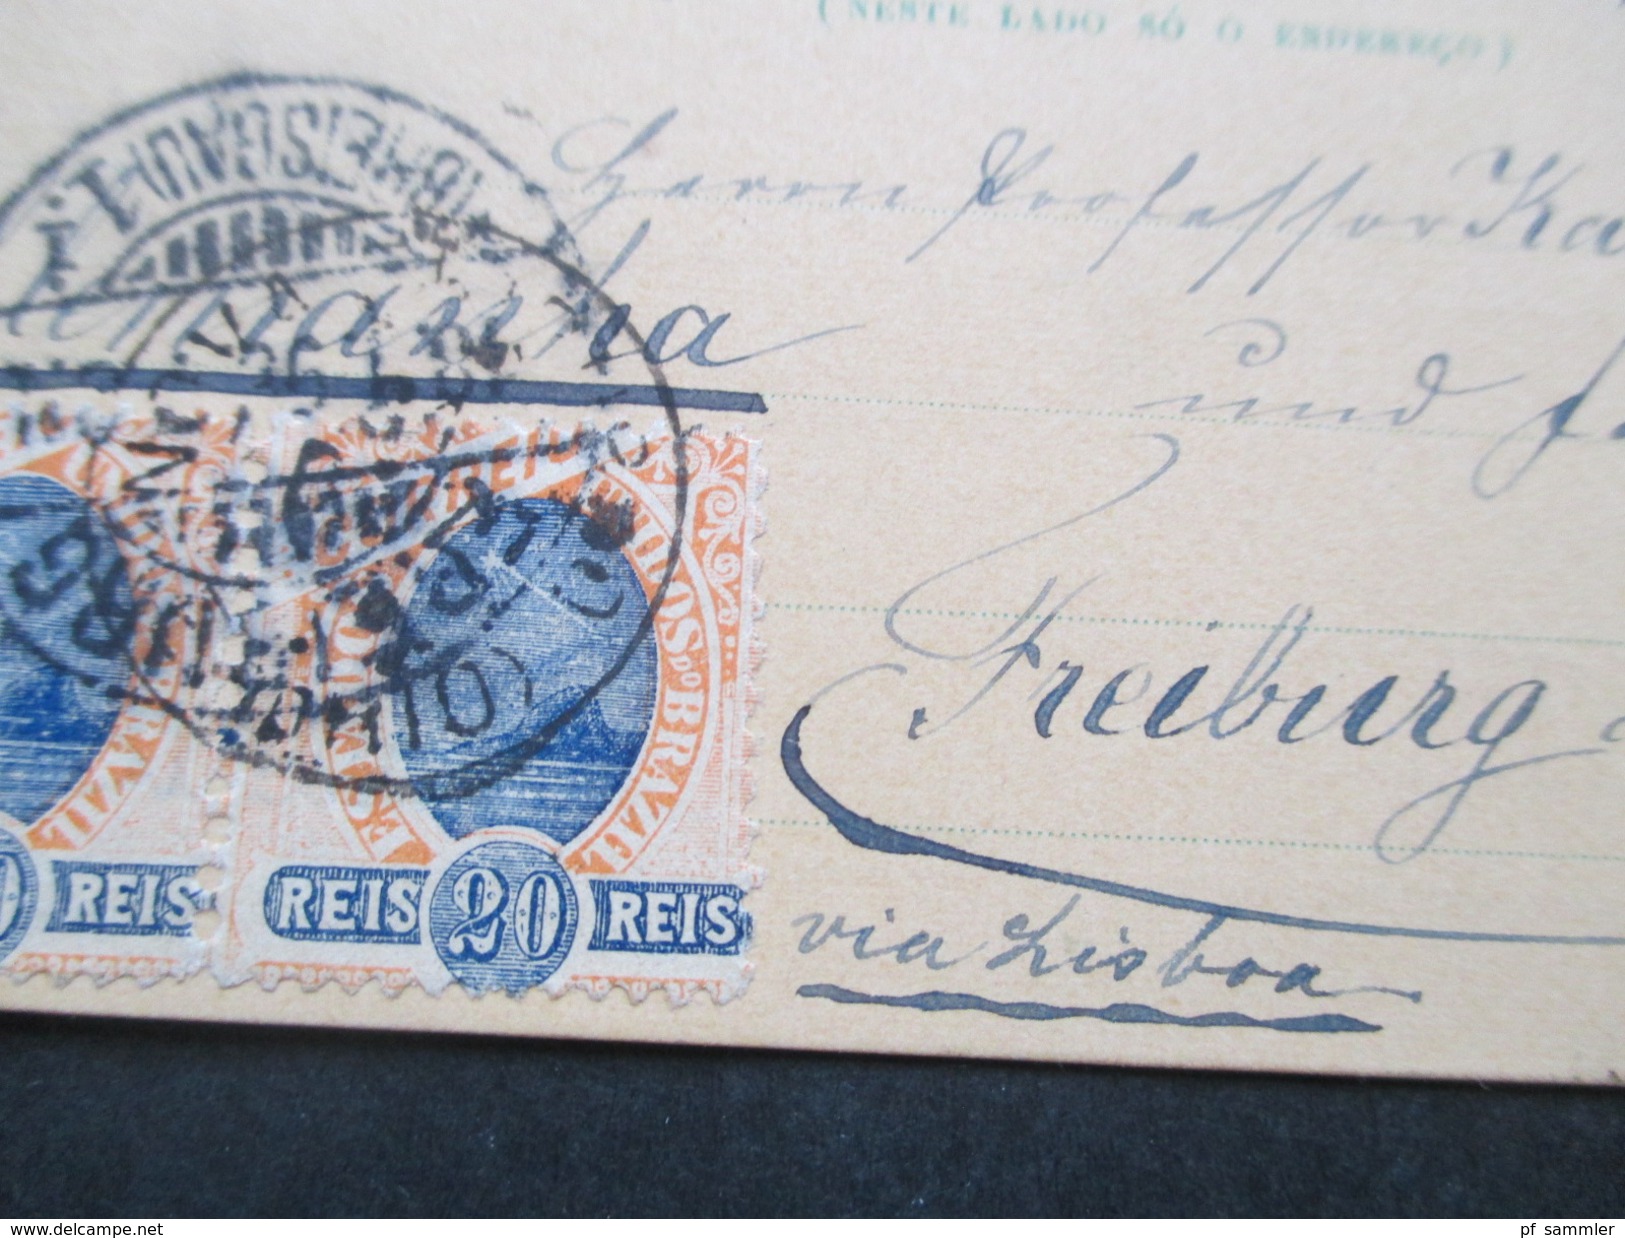 Brasilien 31.12.1895 Ganzsache Mit Zusatzfrankatur Nach Freiburg. Interessante Karte?! Neste Lado So O Endereco - Lettres & Documents